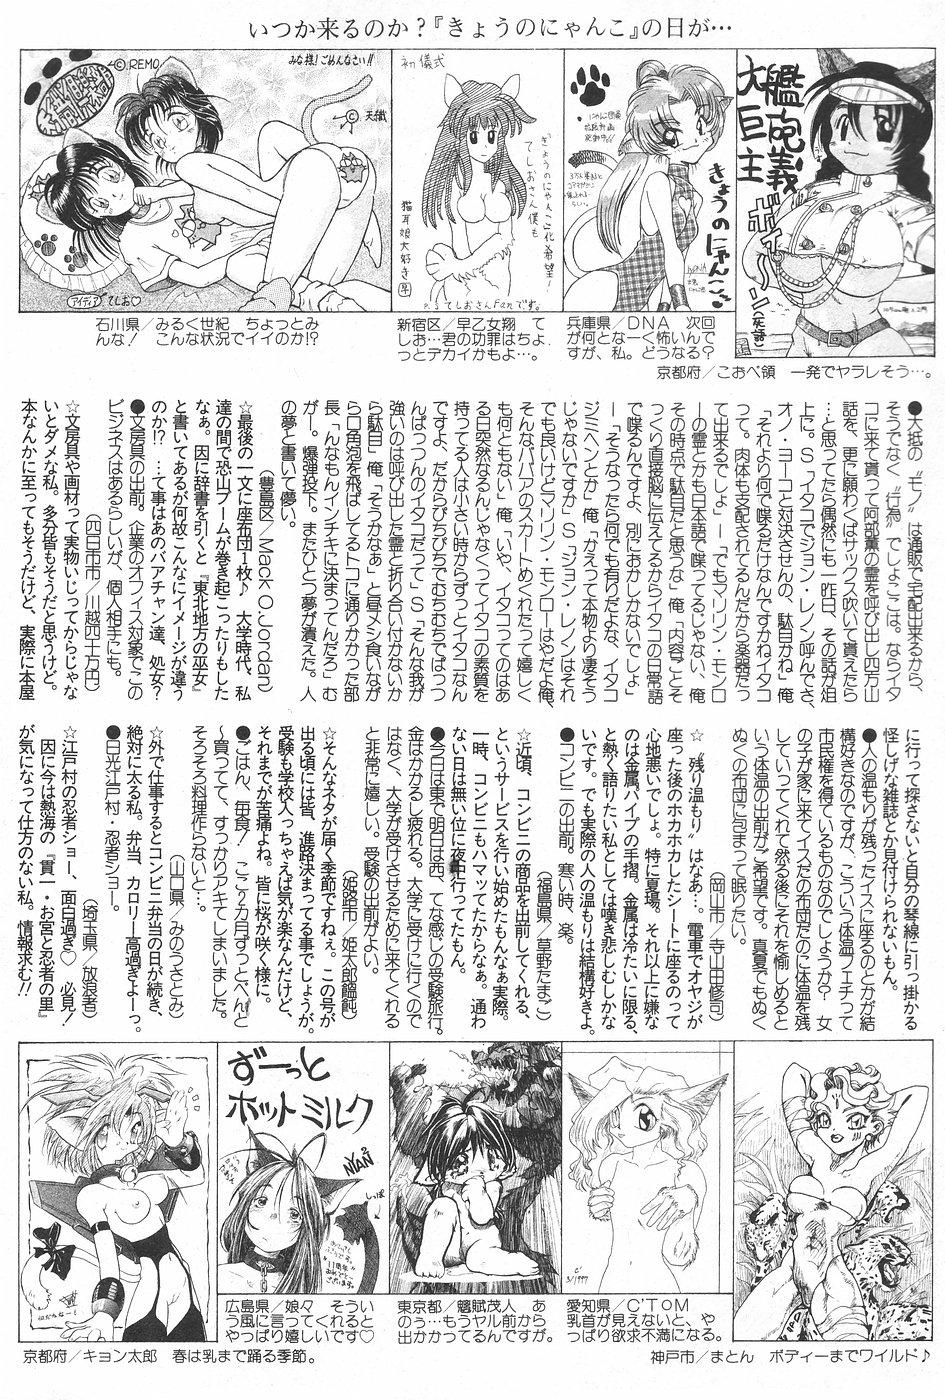 Manga Hotmilk 1997-05 172